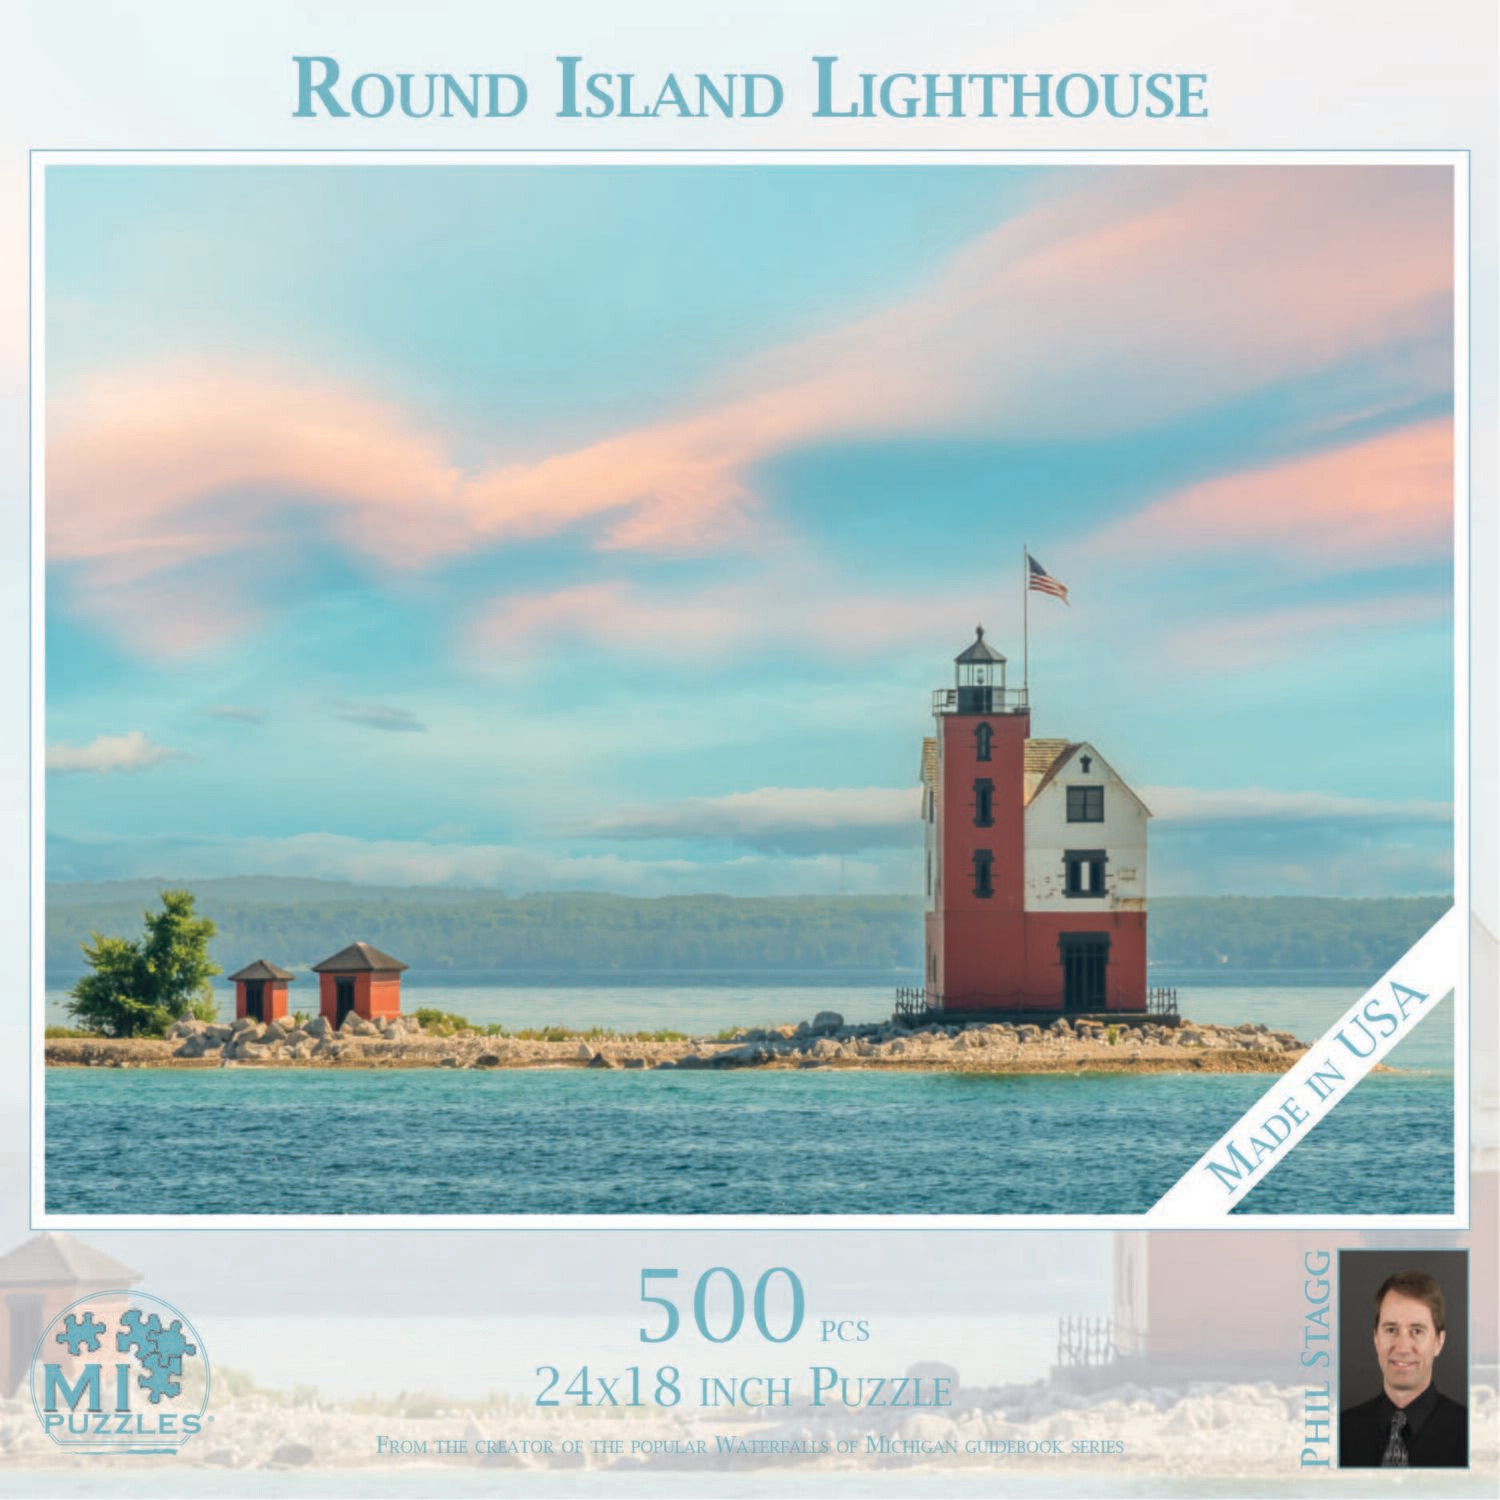 ROUND ISLAND LIGHTHOUSE